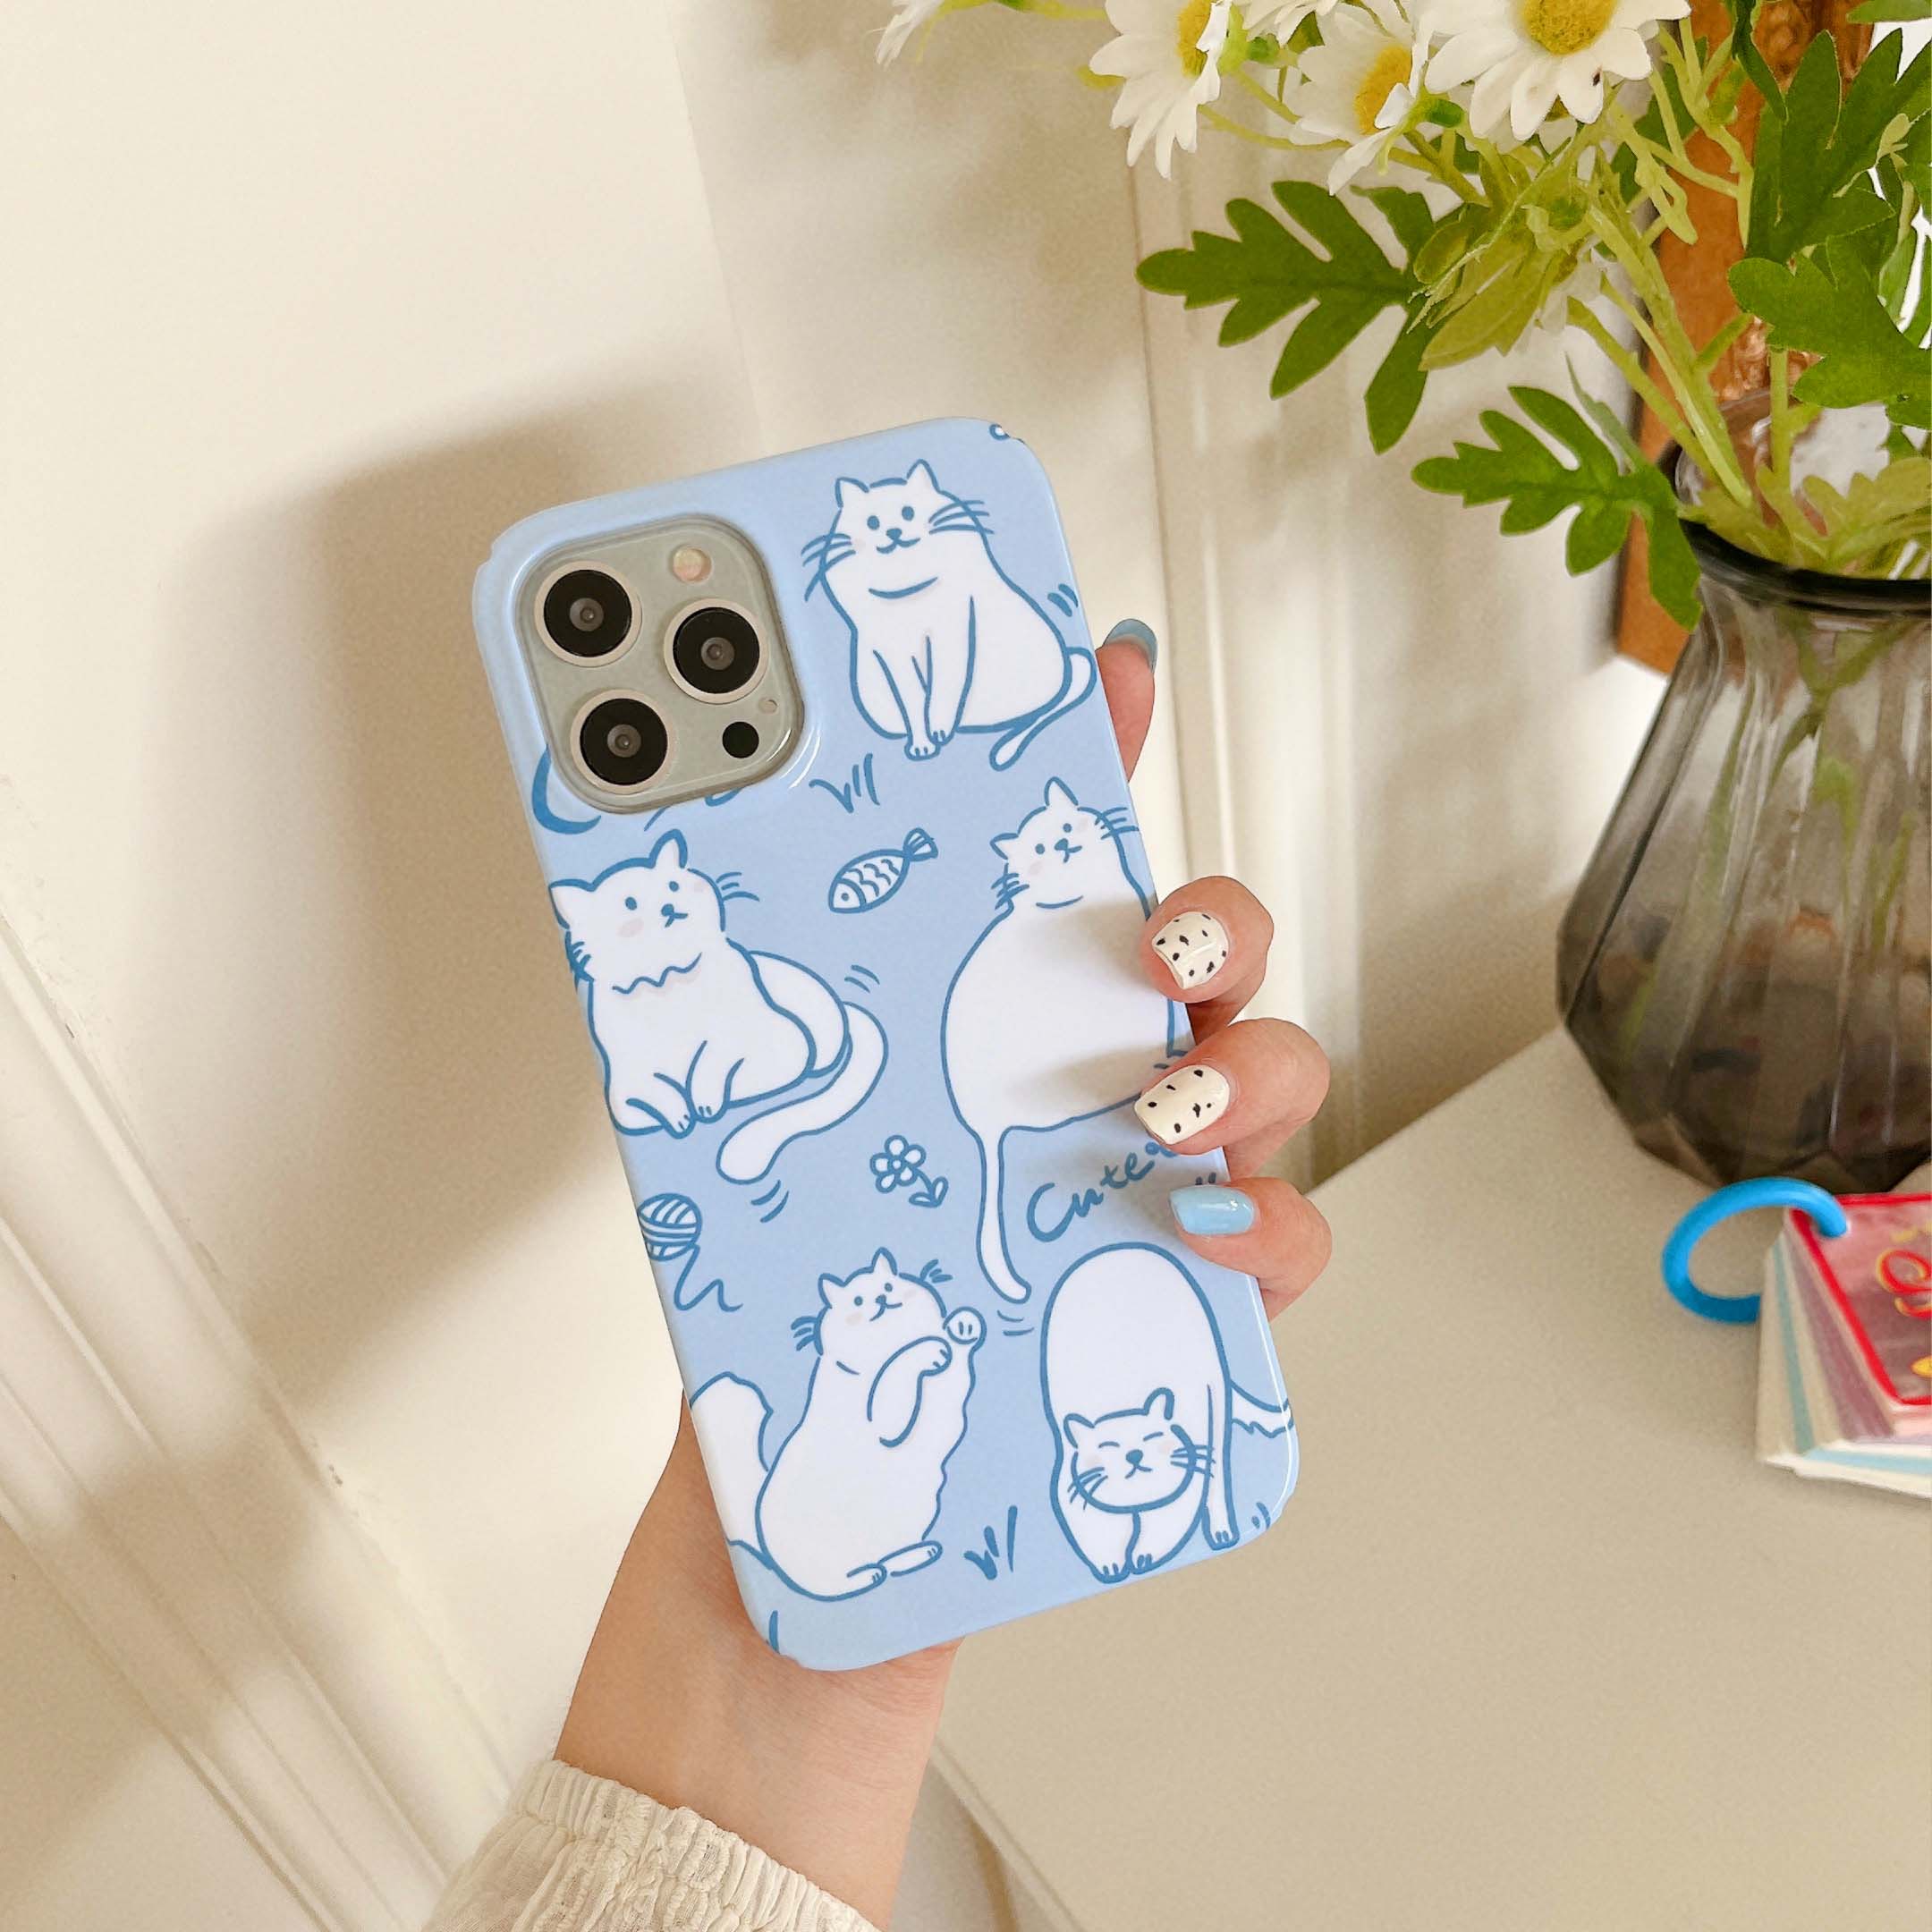 iPhone Cute Cat Phone Cases - For iphone x xs - Cat Phone